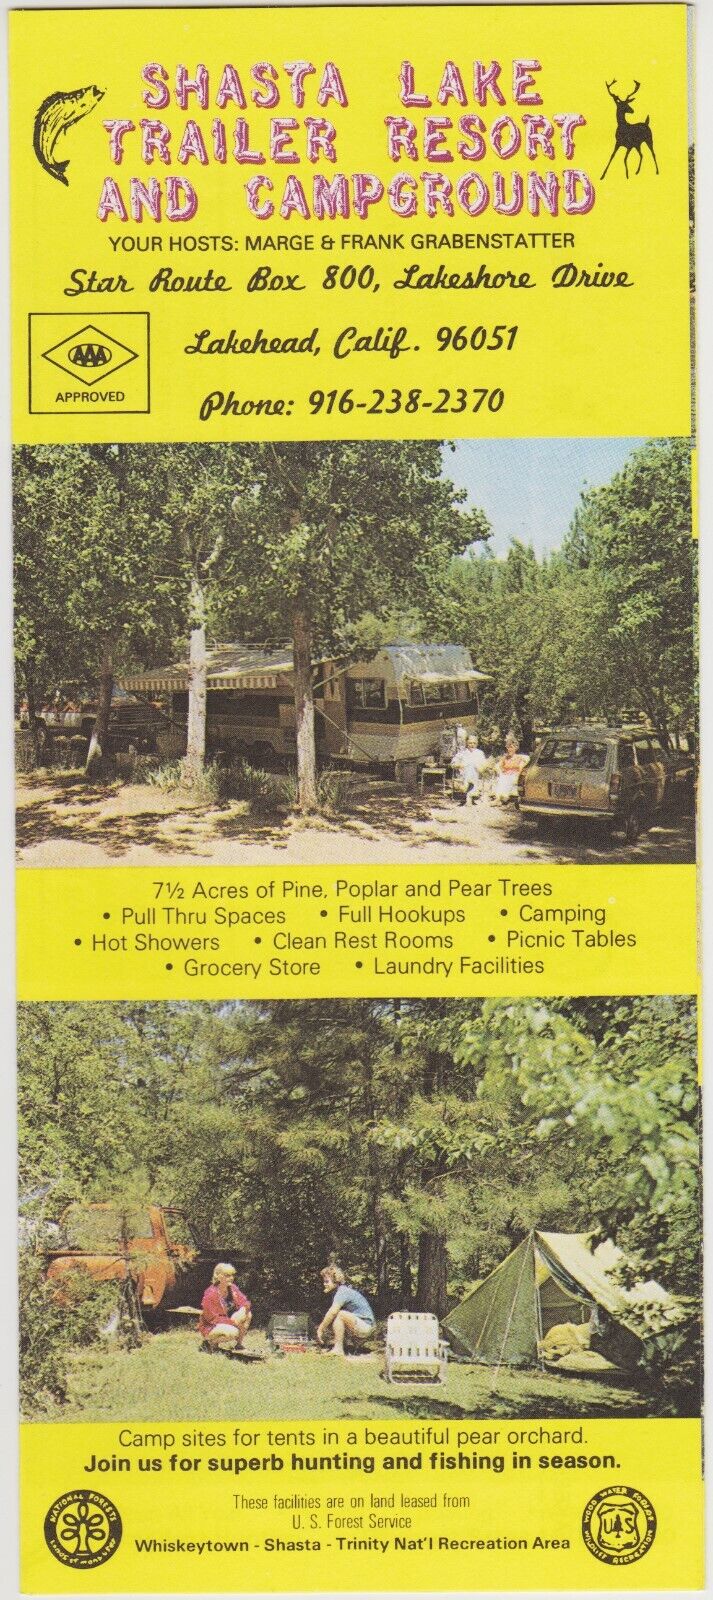 c1980 Shasta Lake Trailer Resort & Campground Brochure